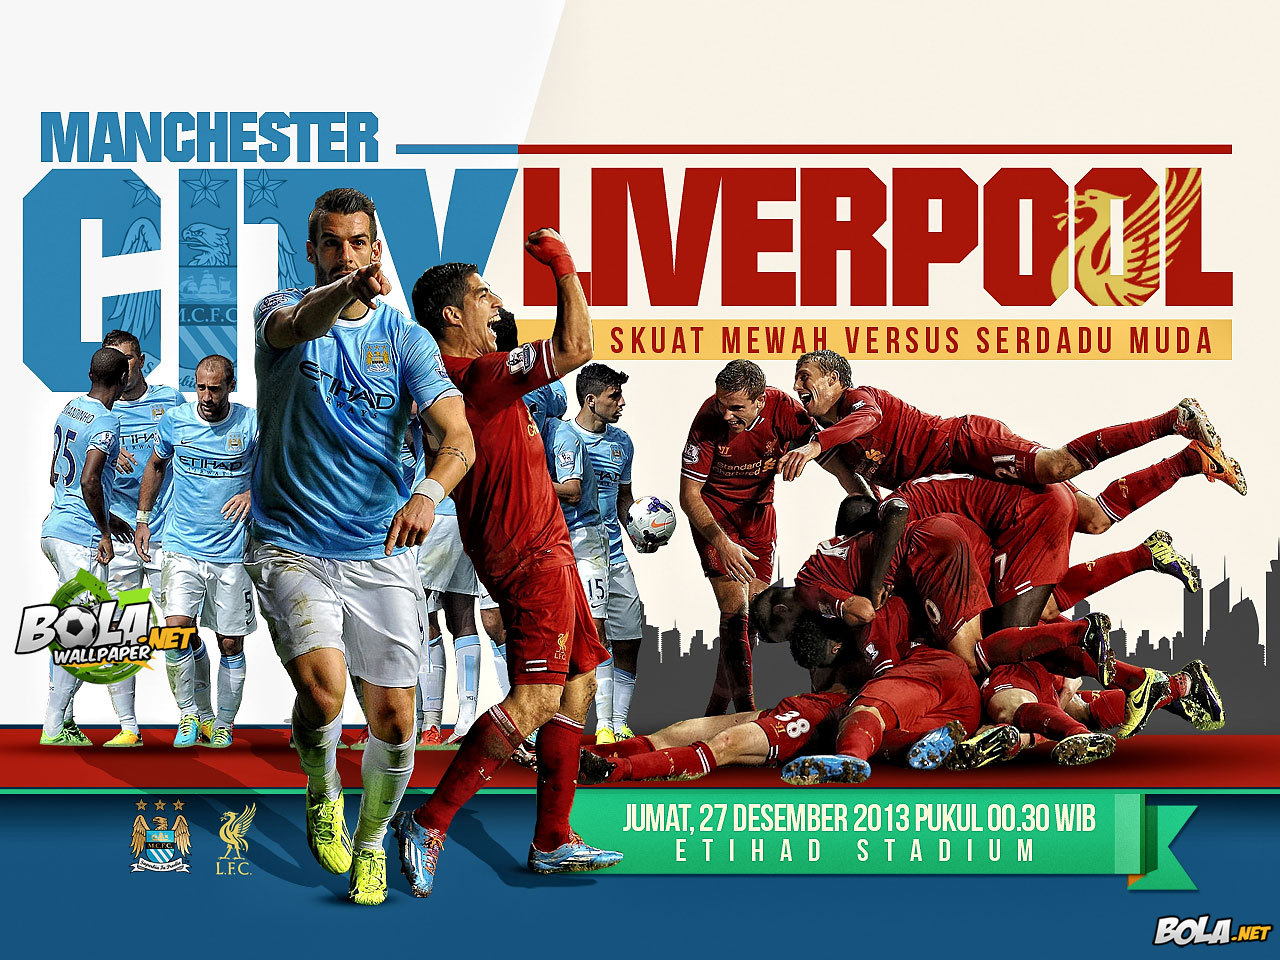 Deskripsi : Wallpaper Manchester City Vs Liverpool, size: 1280x960